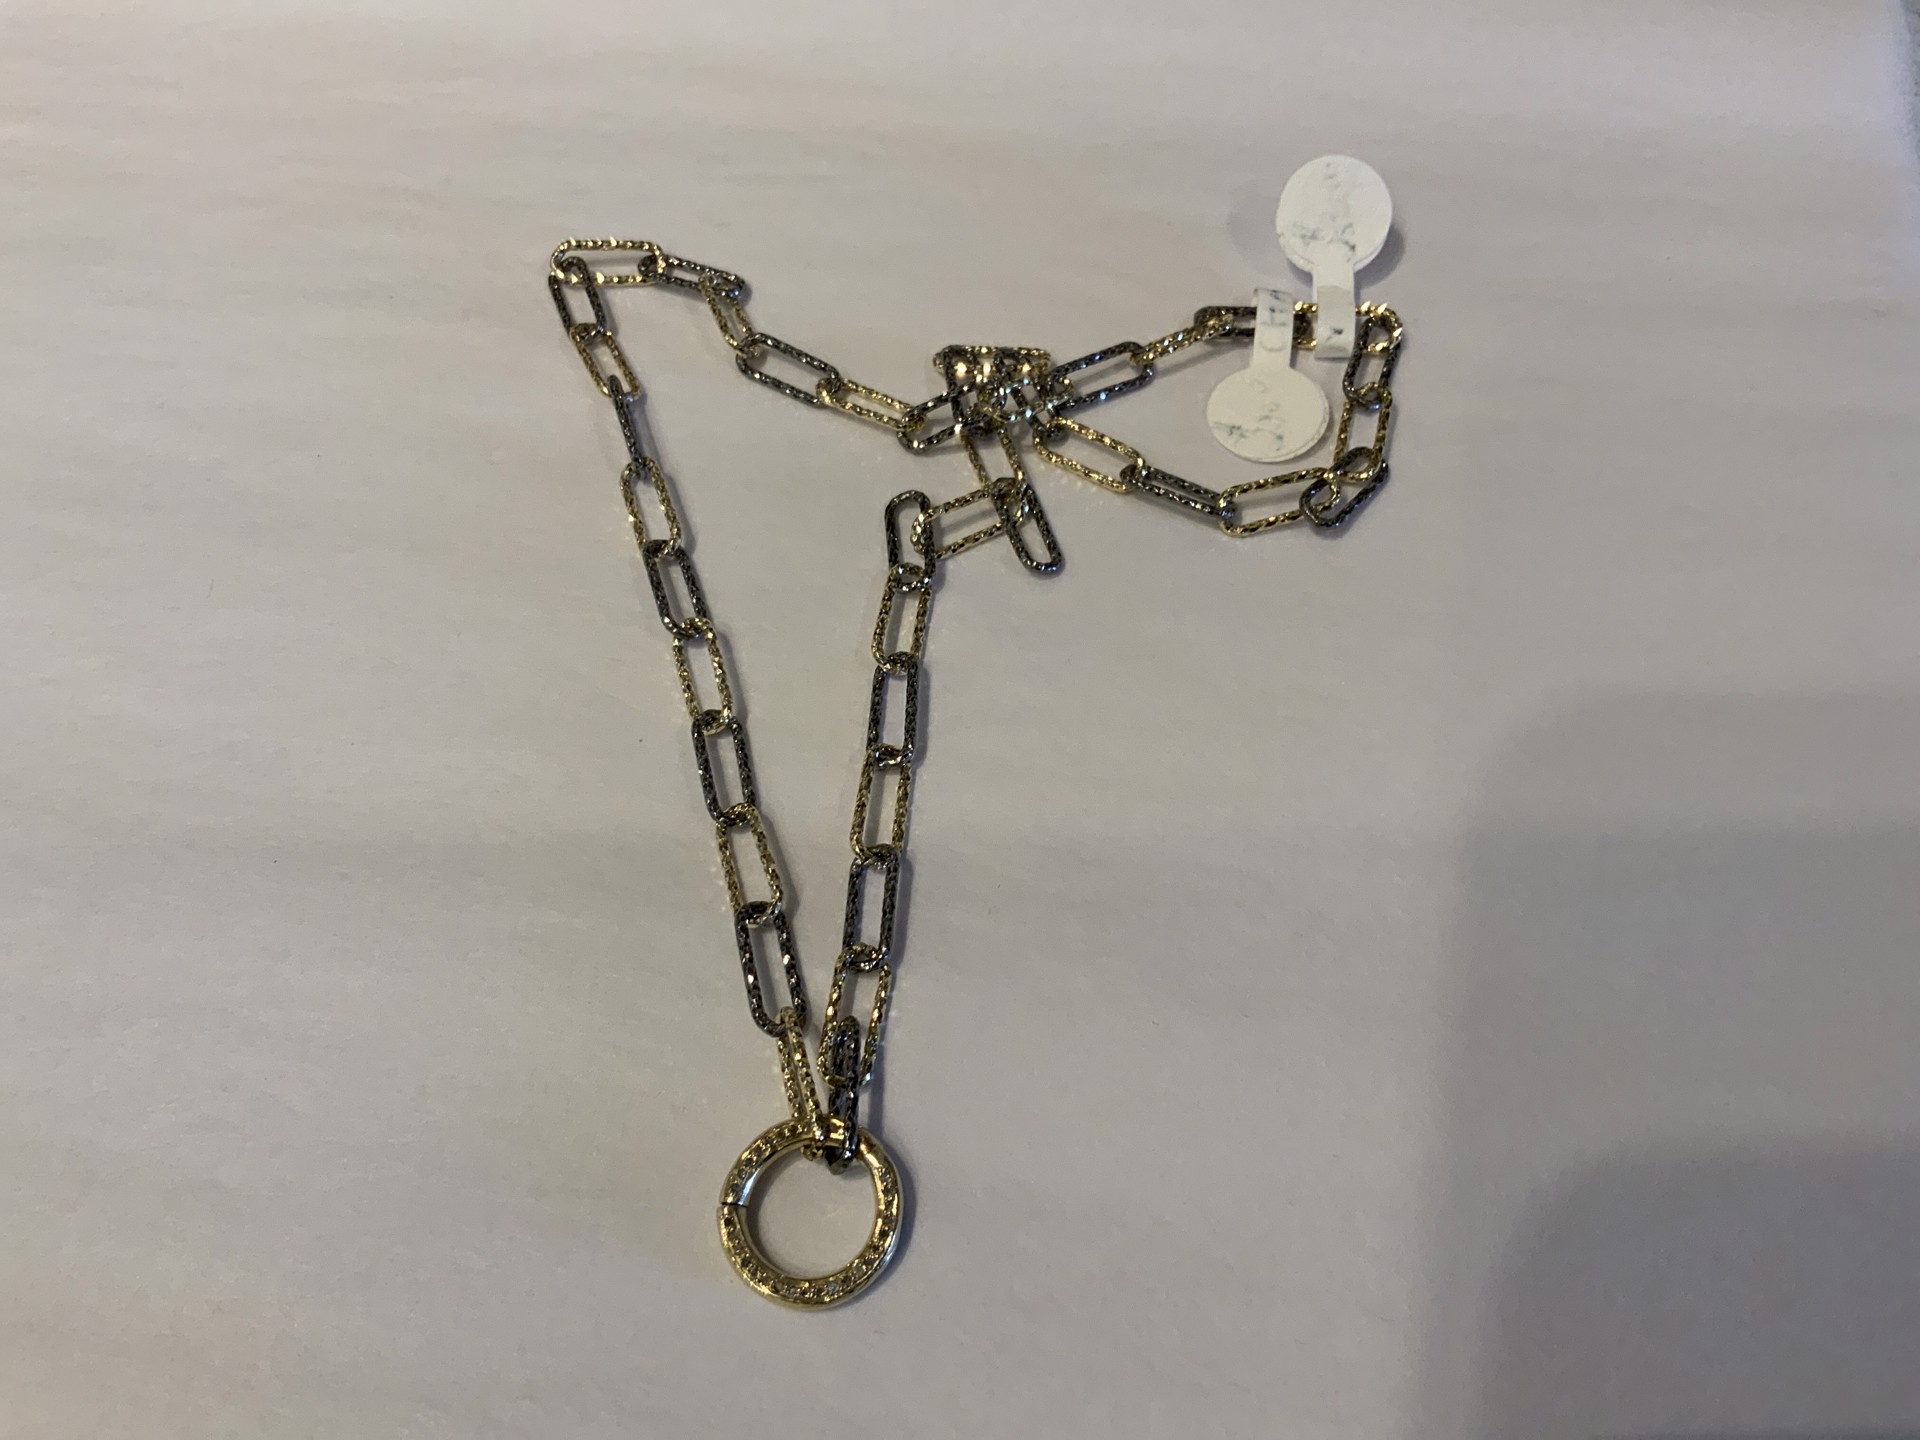 Two Tone Chain Pendant Necklace by Karen Birchmier